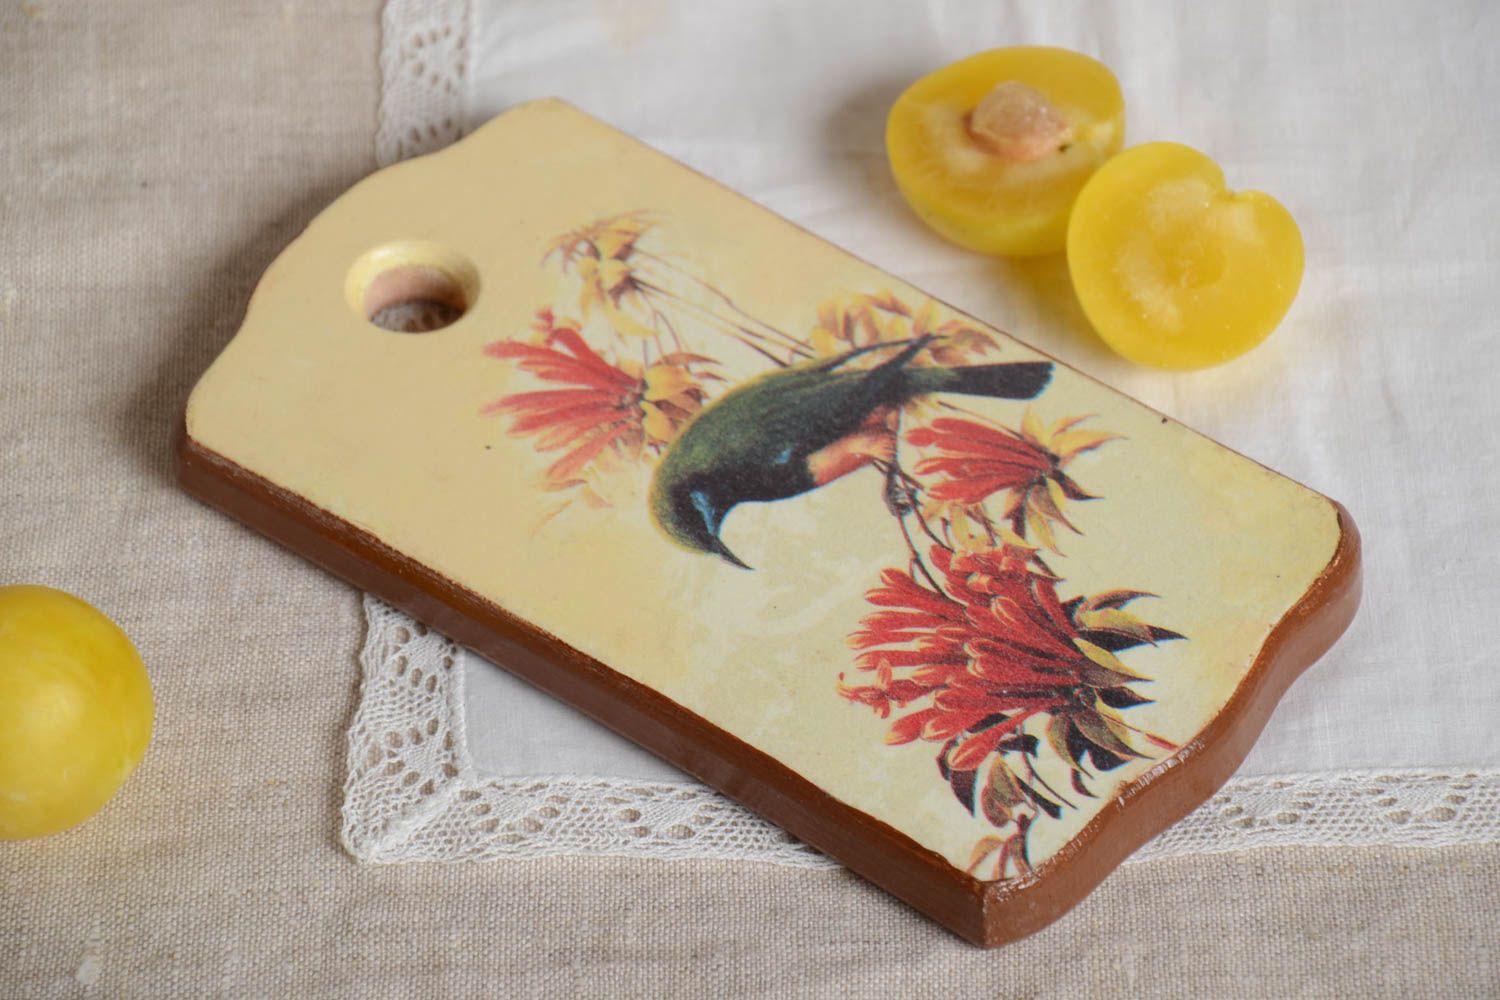 Unusual handmade wooden chopping board cutting board with decoupage gift ideas photo 1